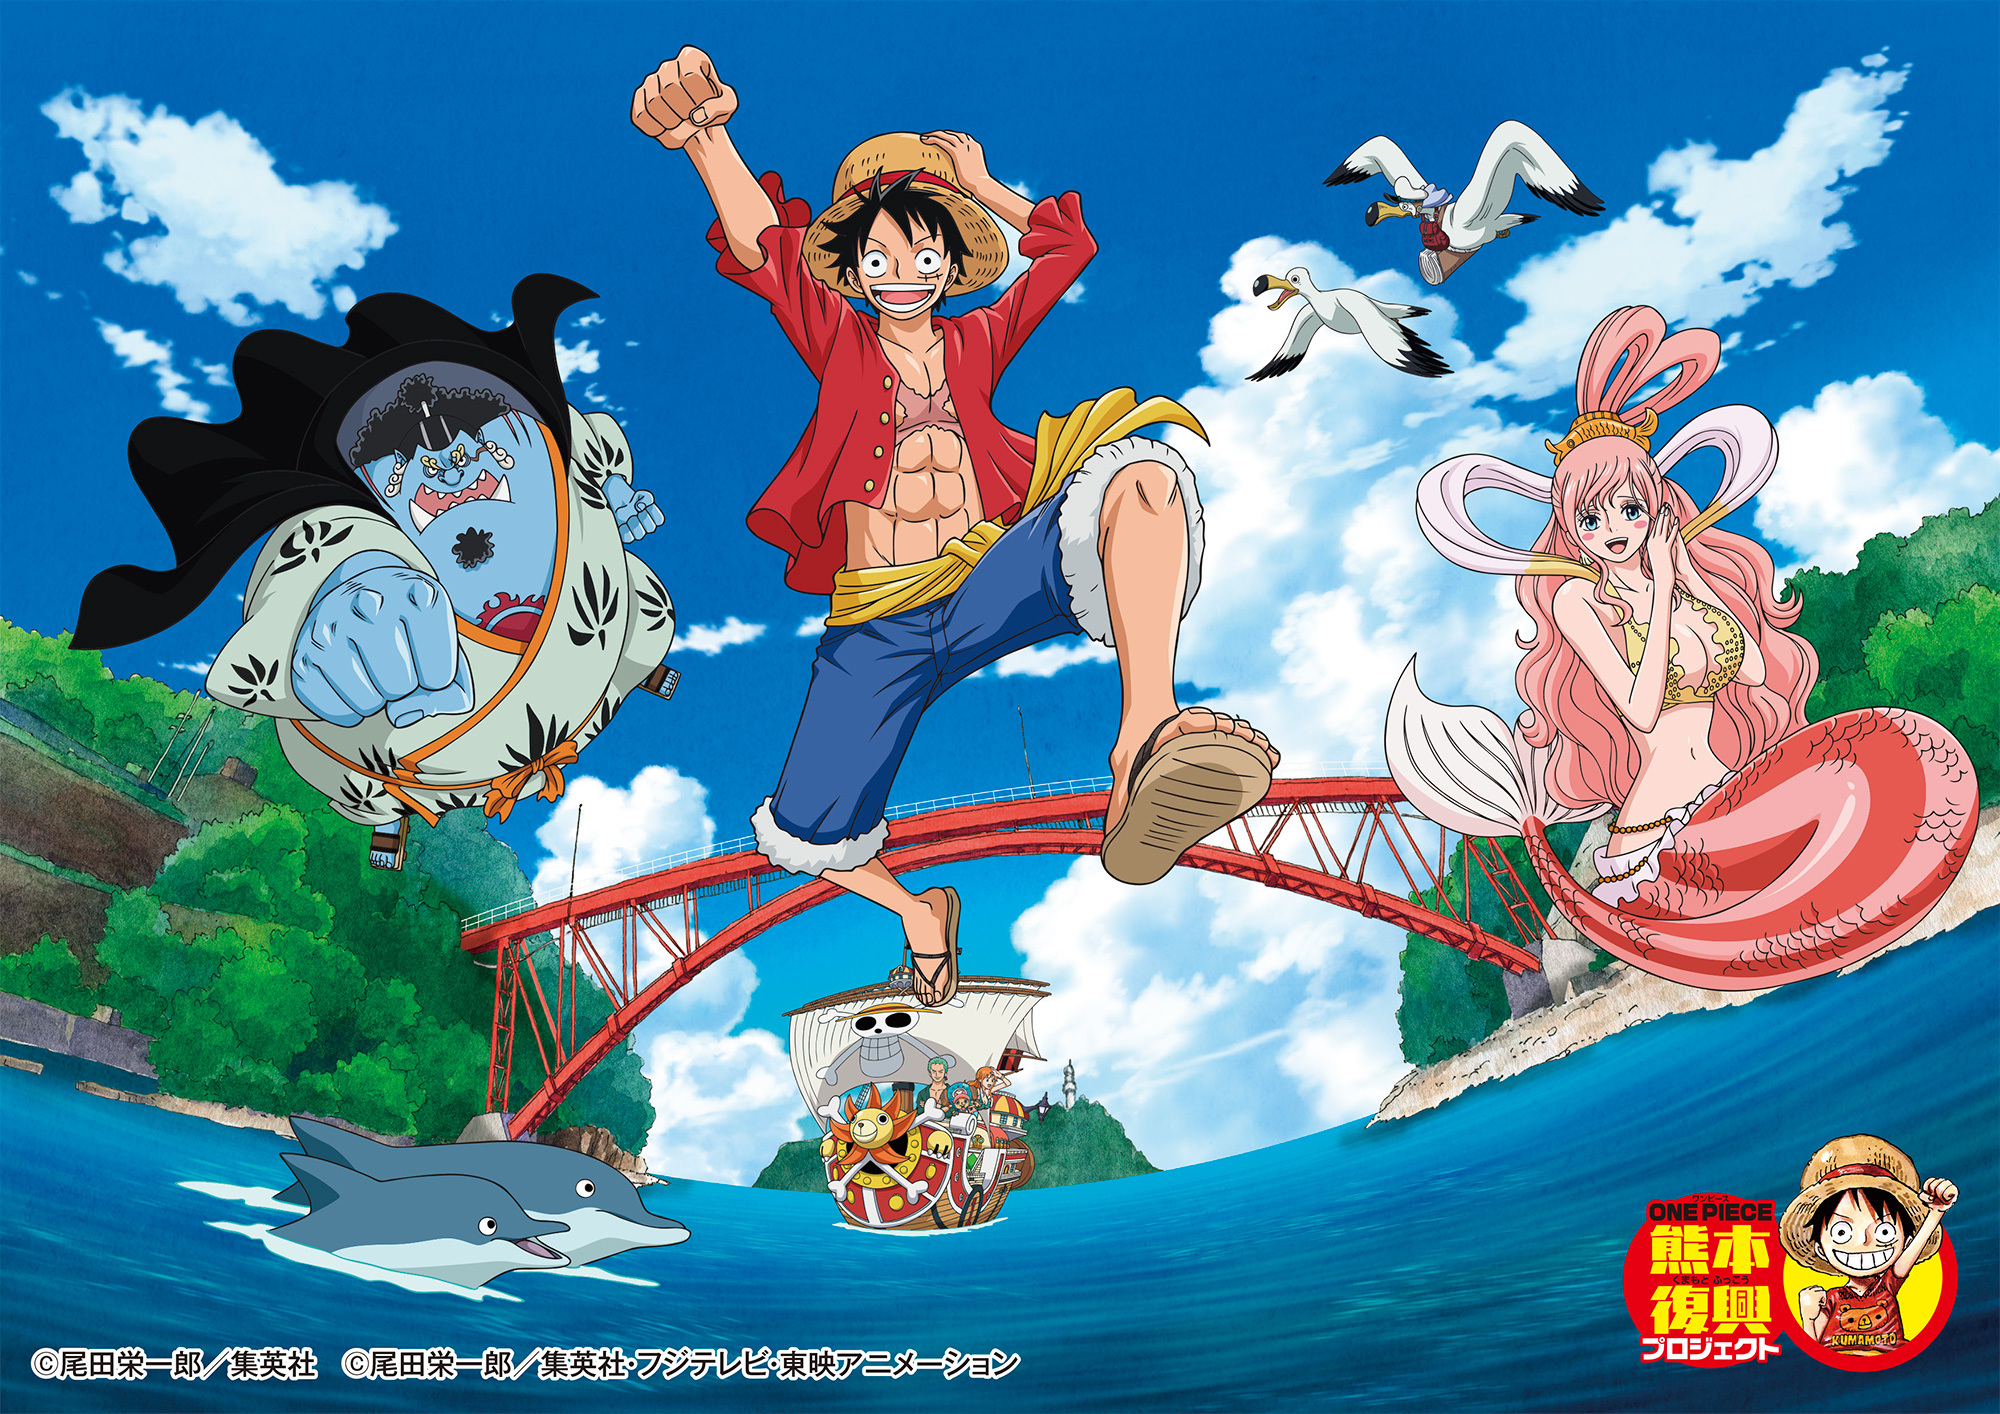 One Piece熊本復興プロジェクト 上天草市 とことん楽 たの Sea観光スタンプラリー の開催 上天草市のプレスリリース